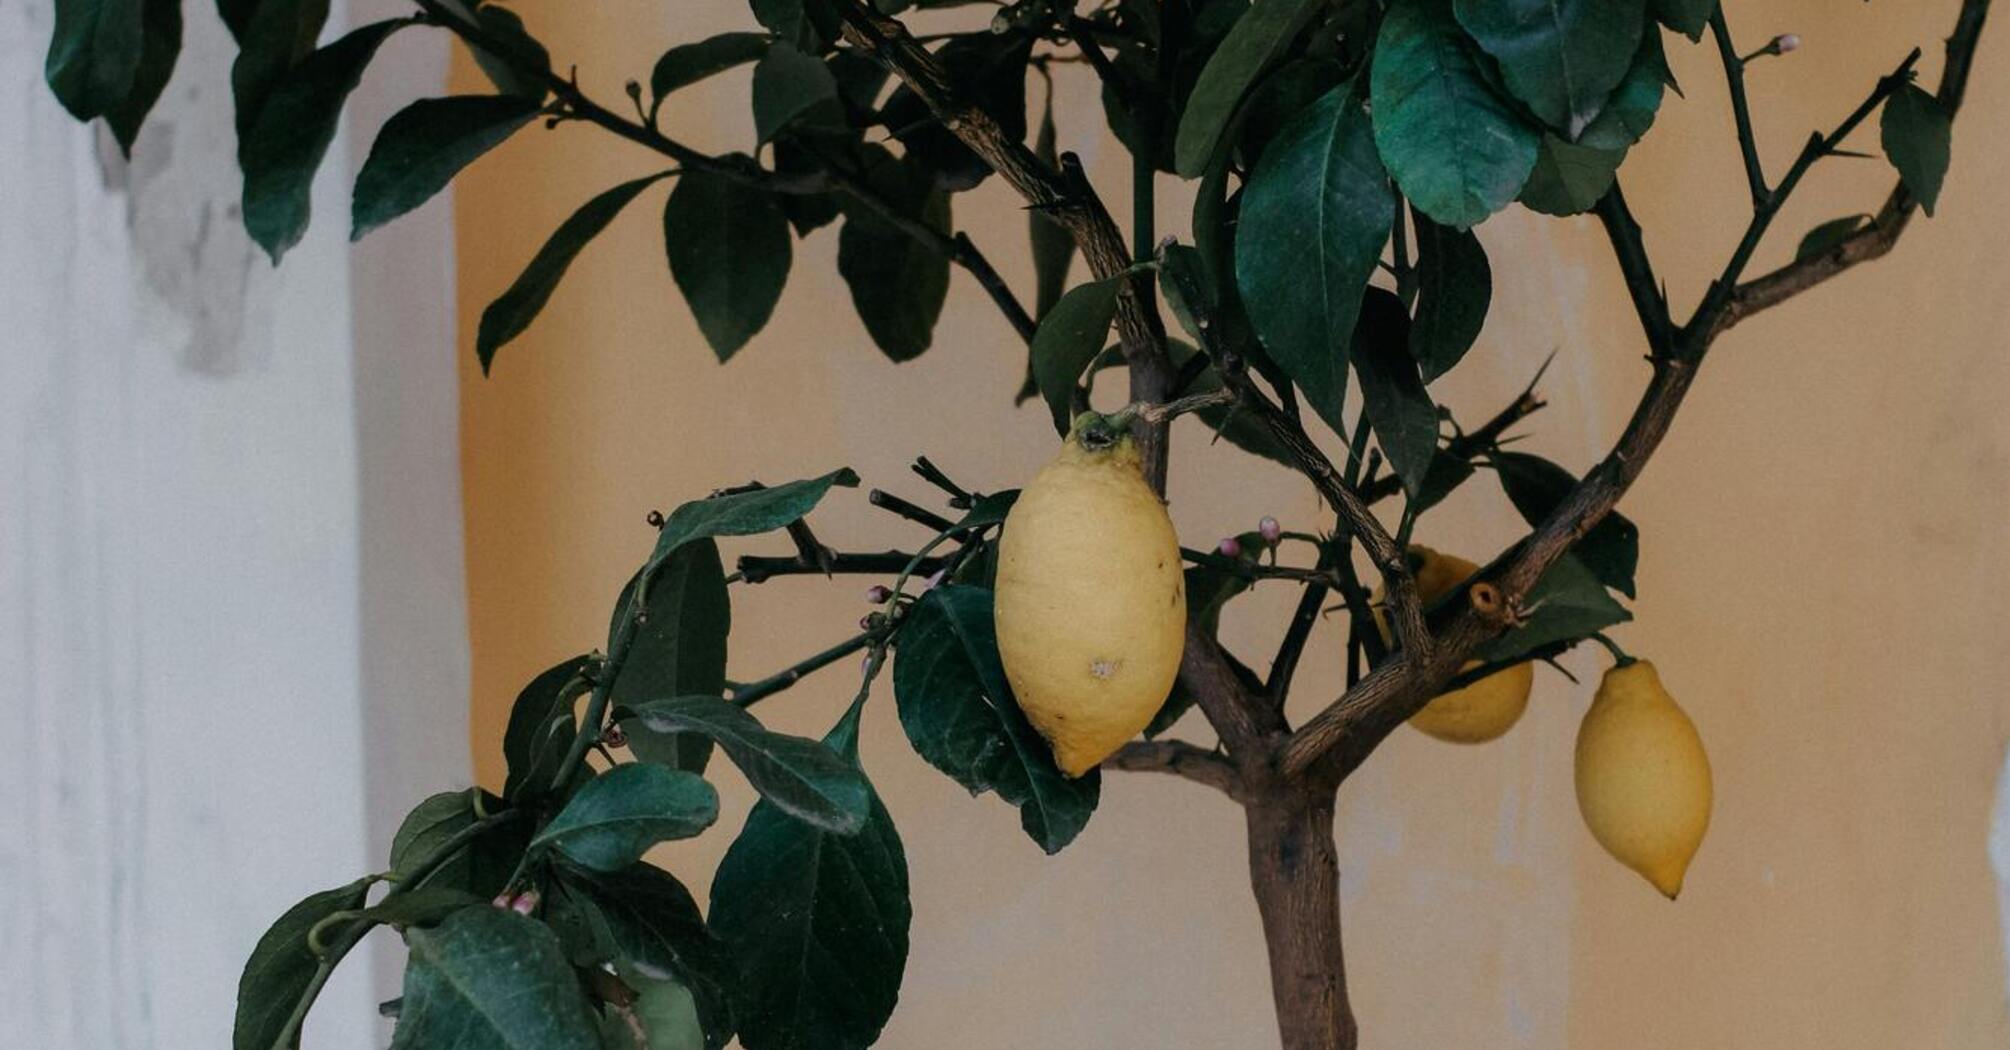 How to grow a lemon tree at home - the secrets of successful lemon tree ...